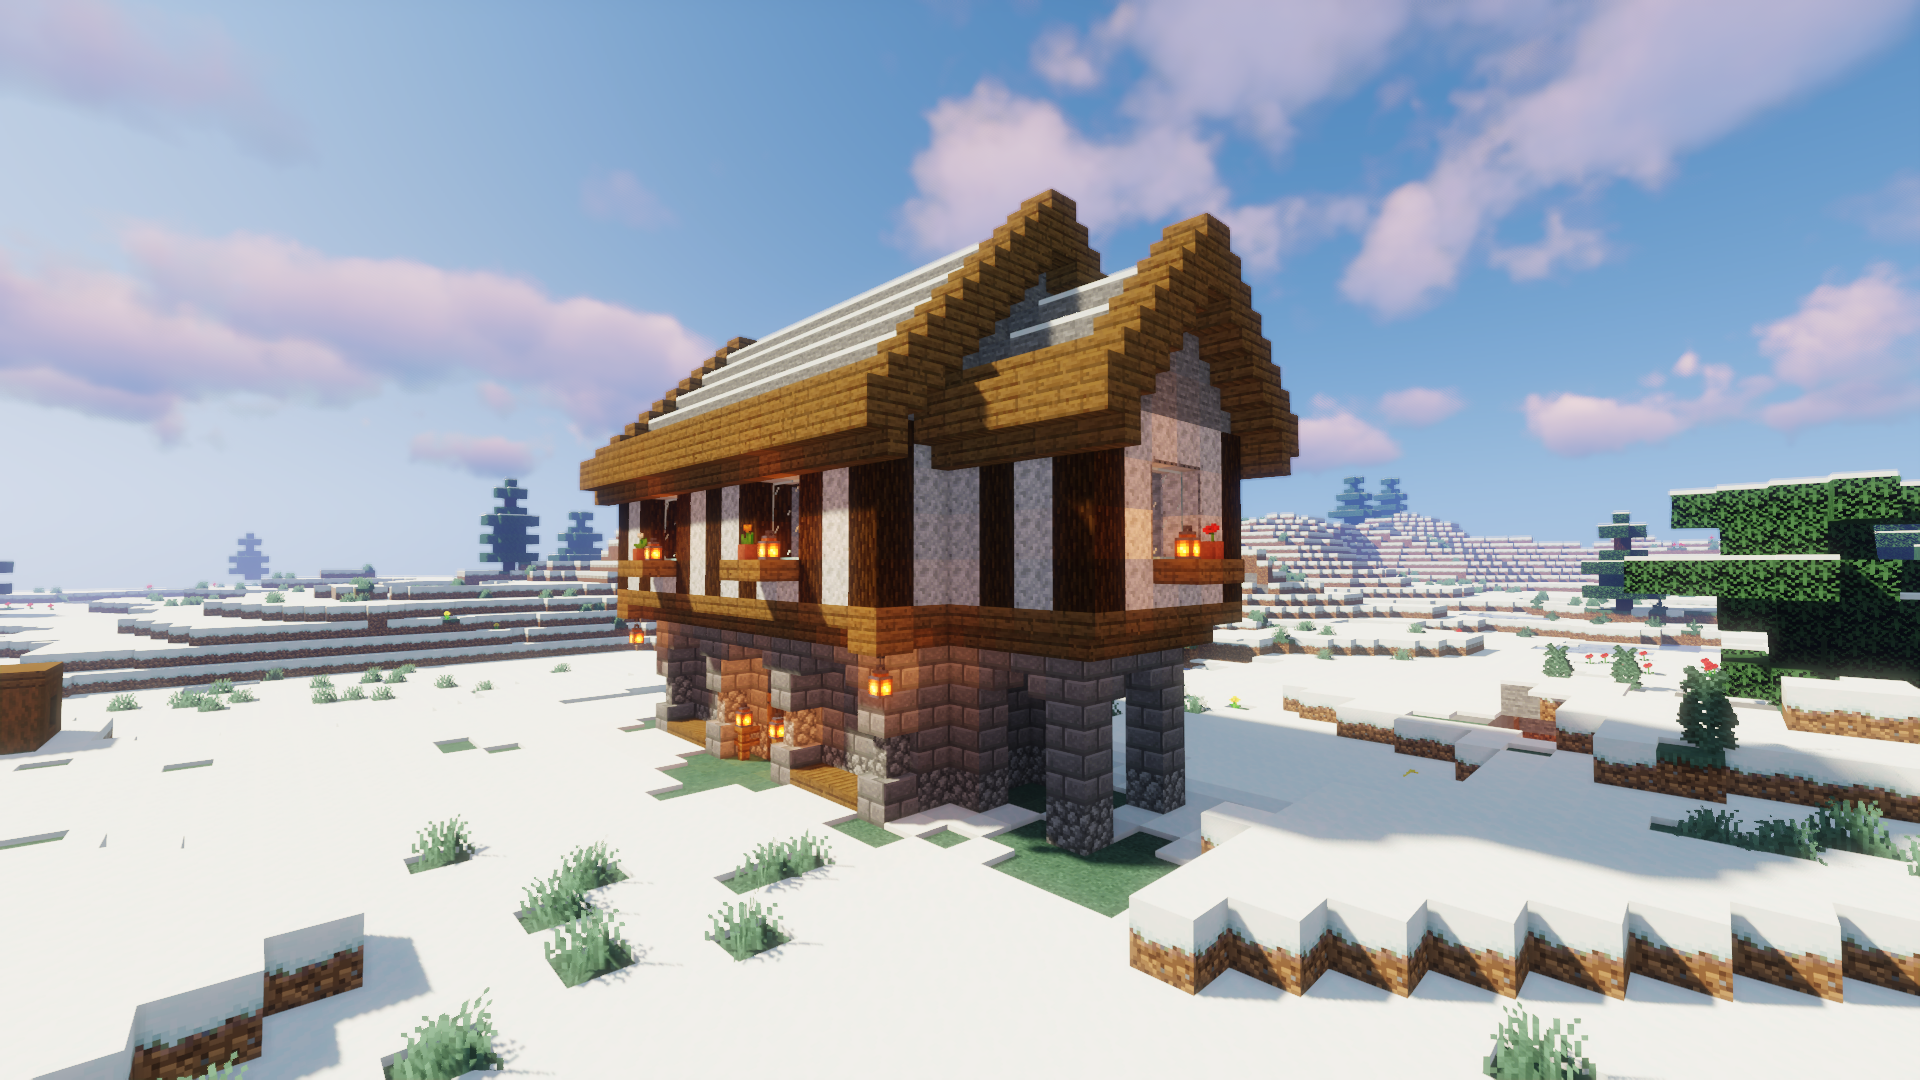 minecraft winter house